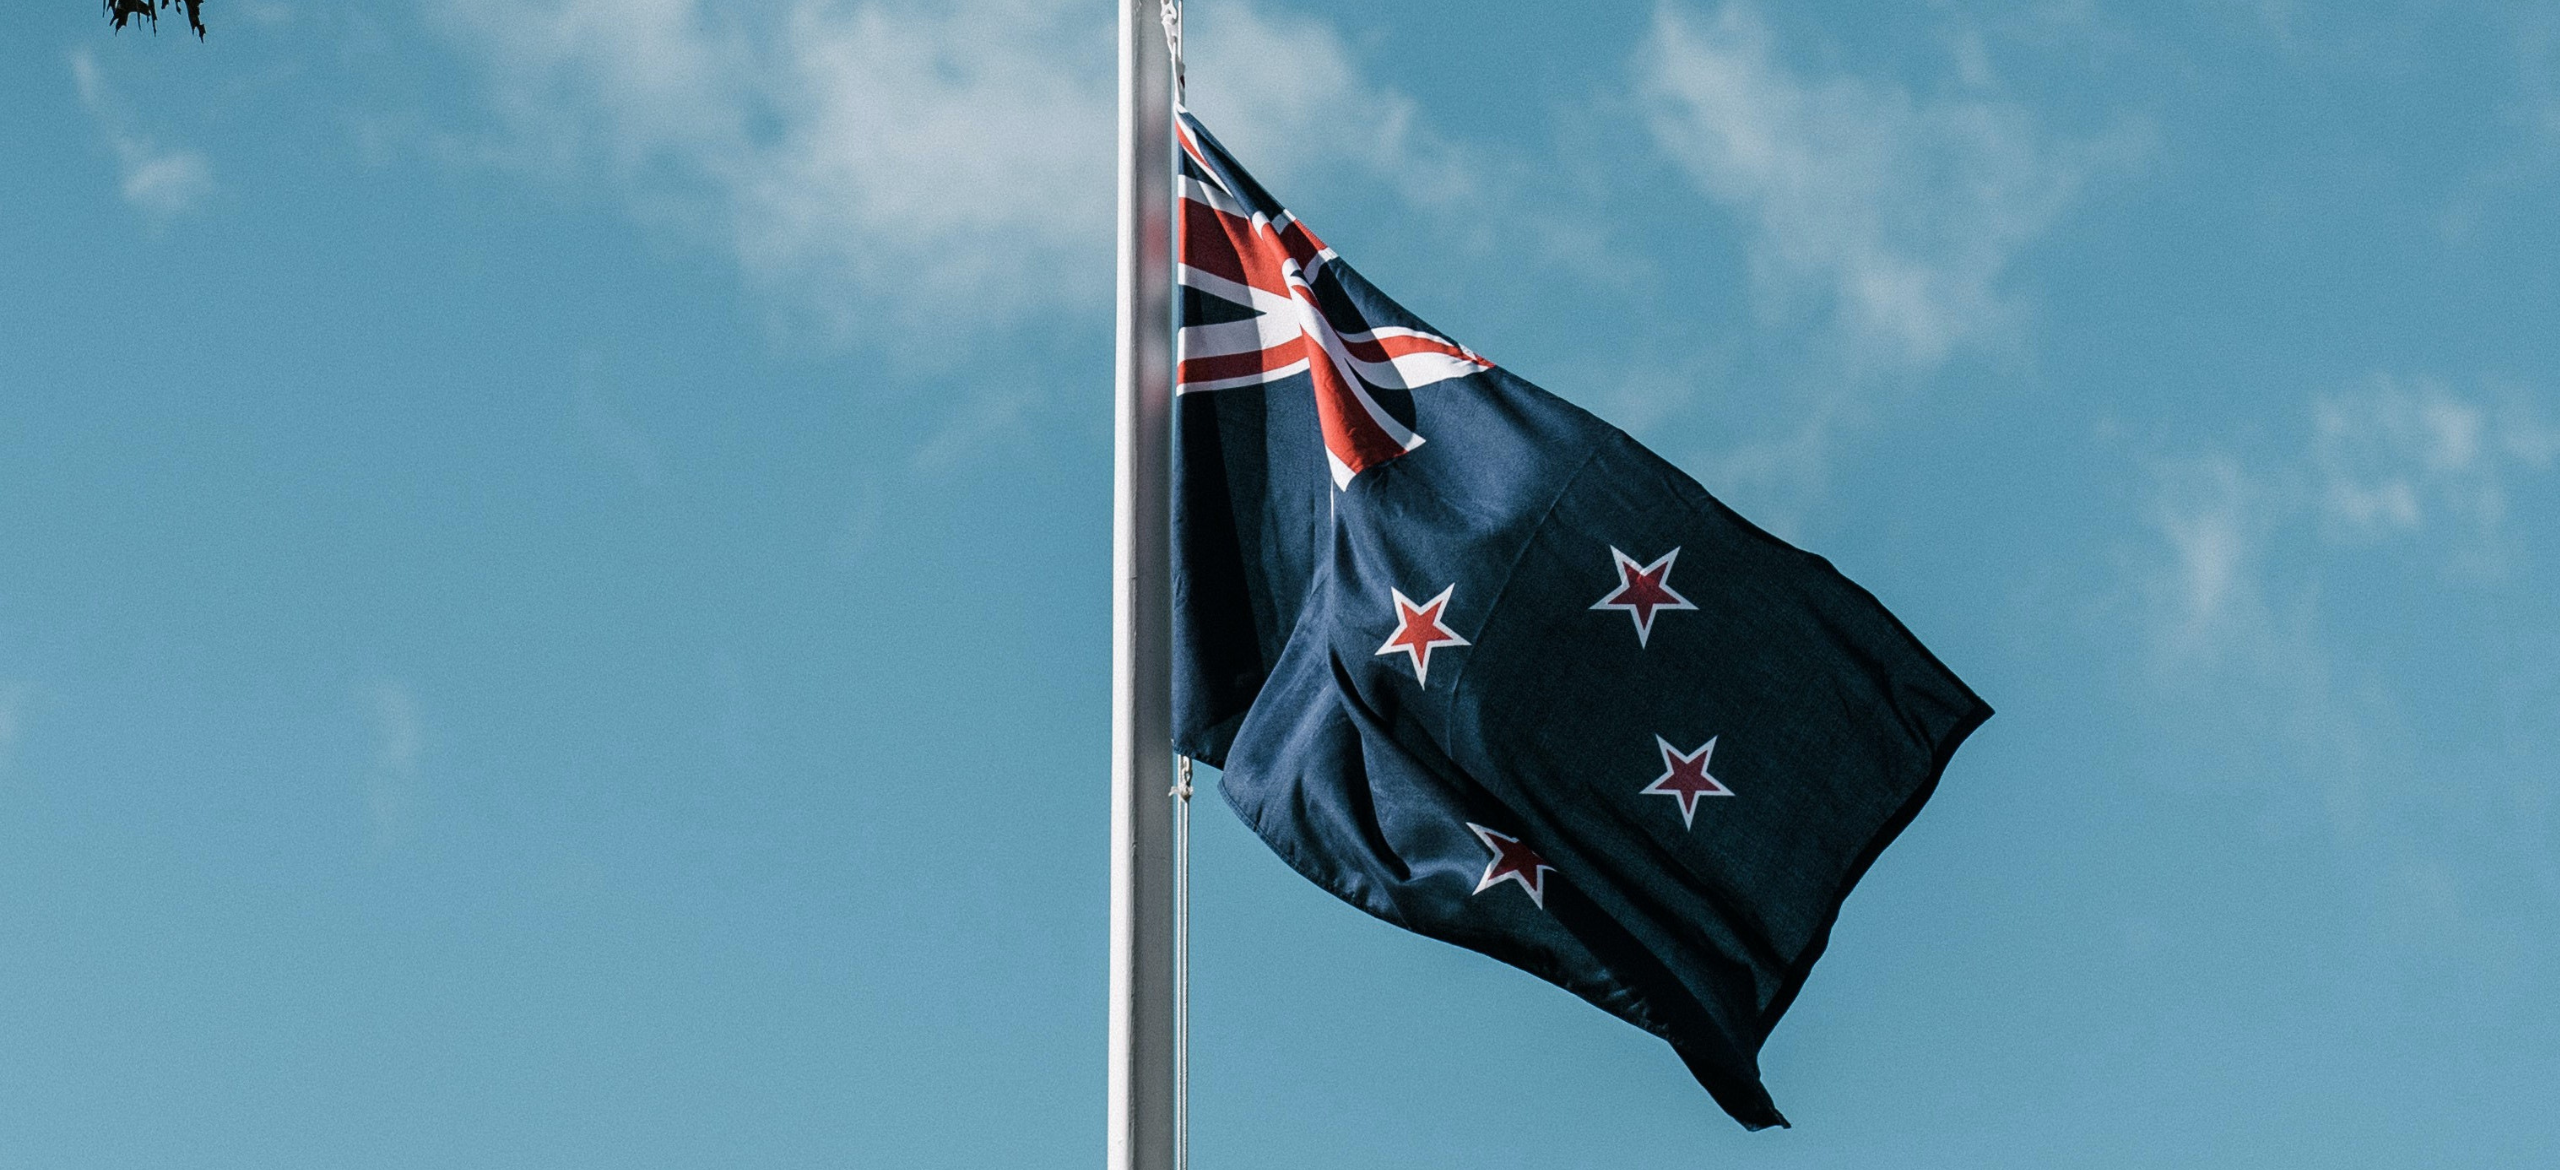 La Nuova Zelanda covid-free